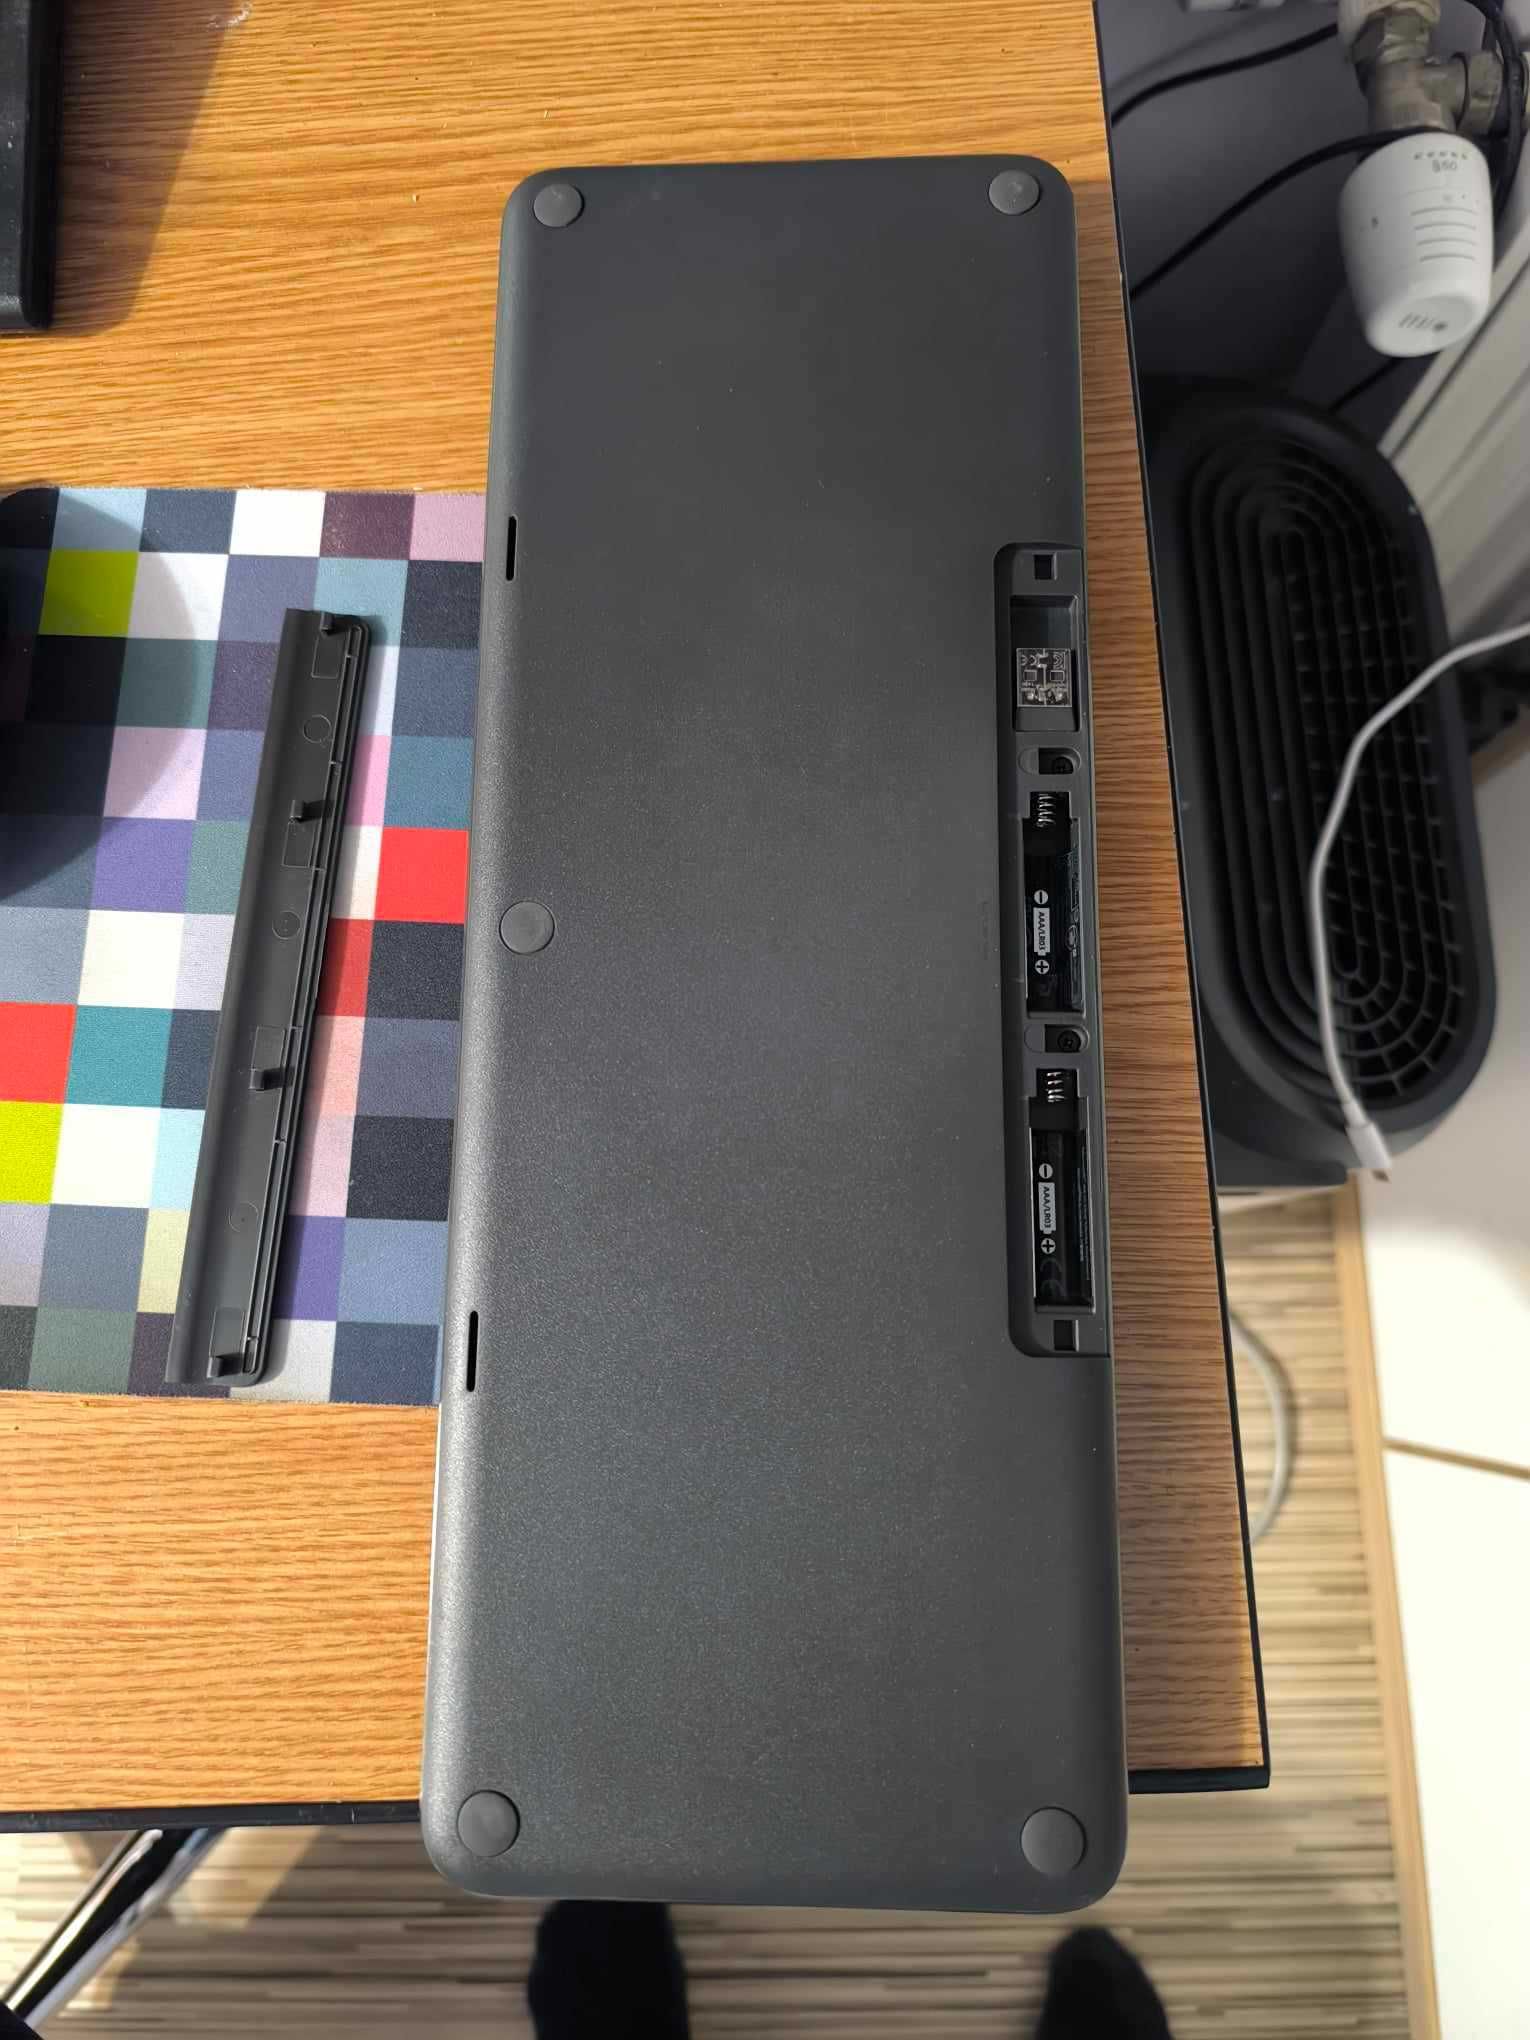 Vand tastatura Microsoft All-in-One, Wireless, Negru